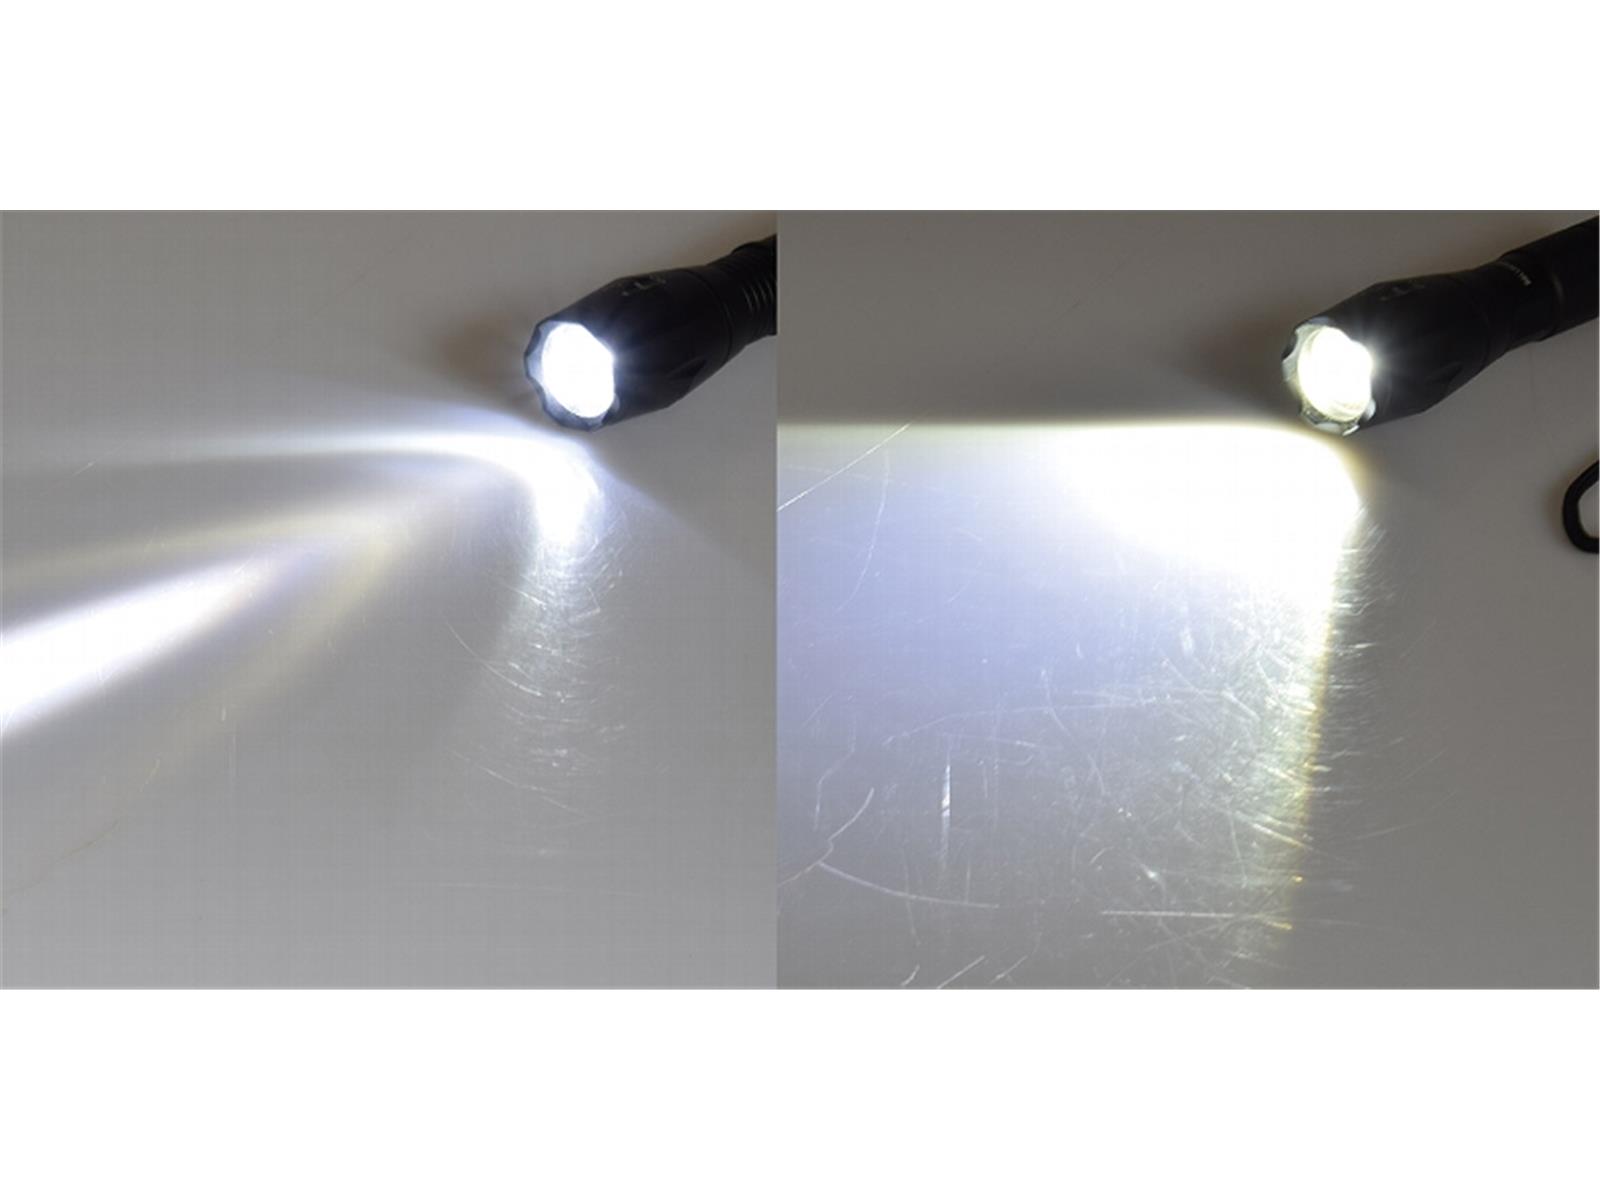 LED-Taschenlampe "CTL10 Zoom" 10WØxL 136x37mm, Zoomfunktion, 350 Lumen